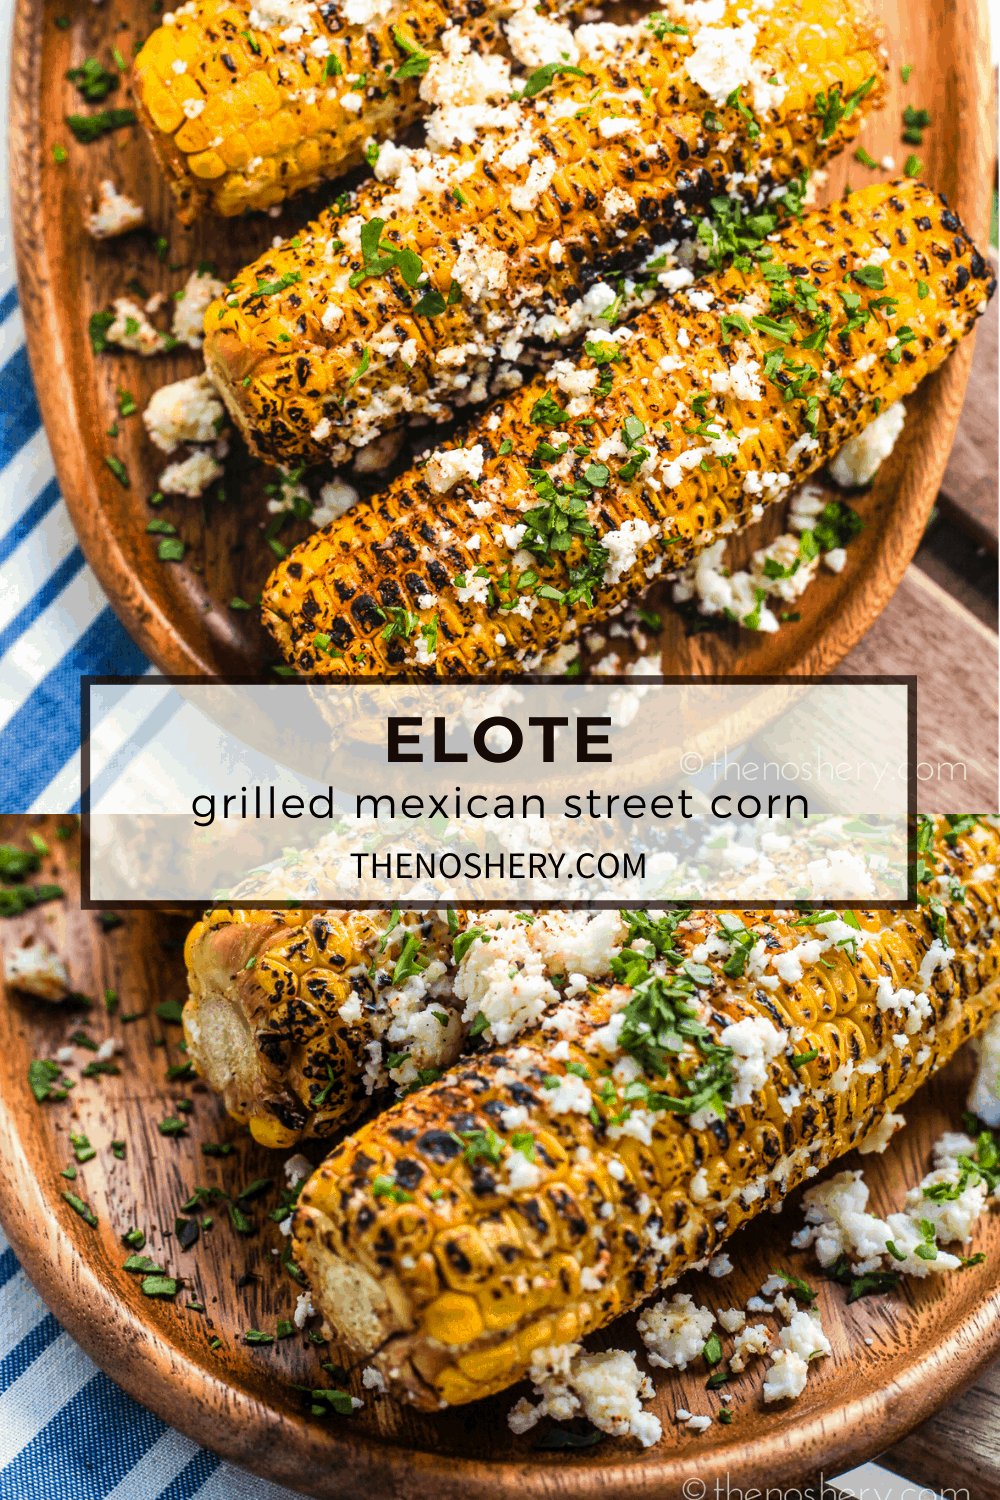 Elote Corn (Mexican Street Corn) - The Noshery